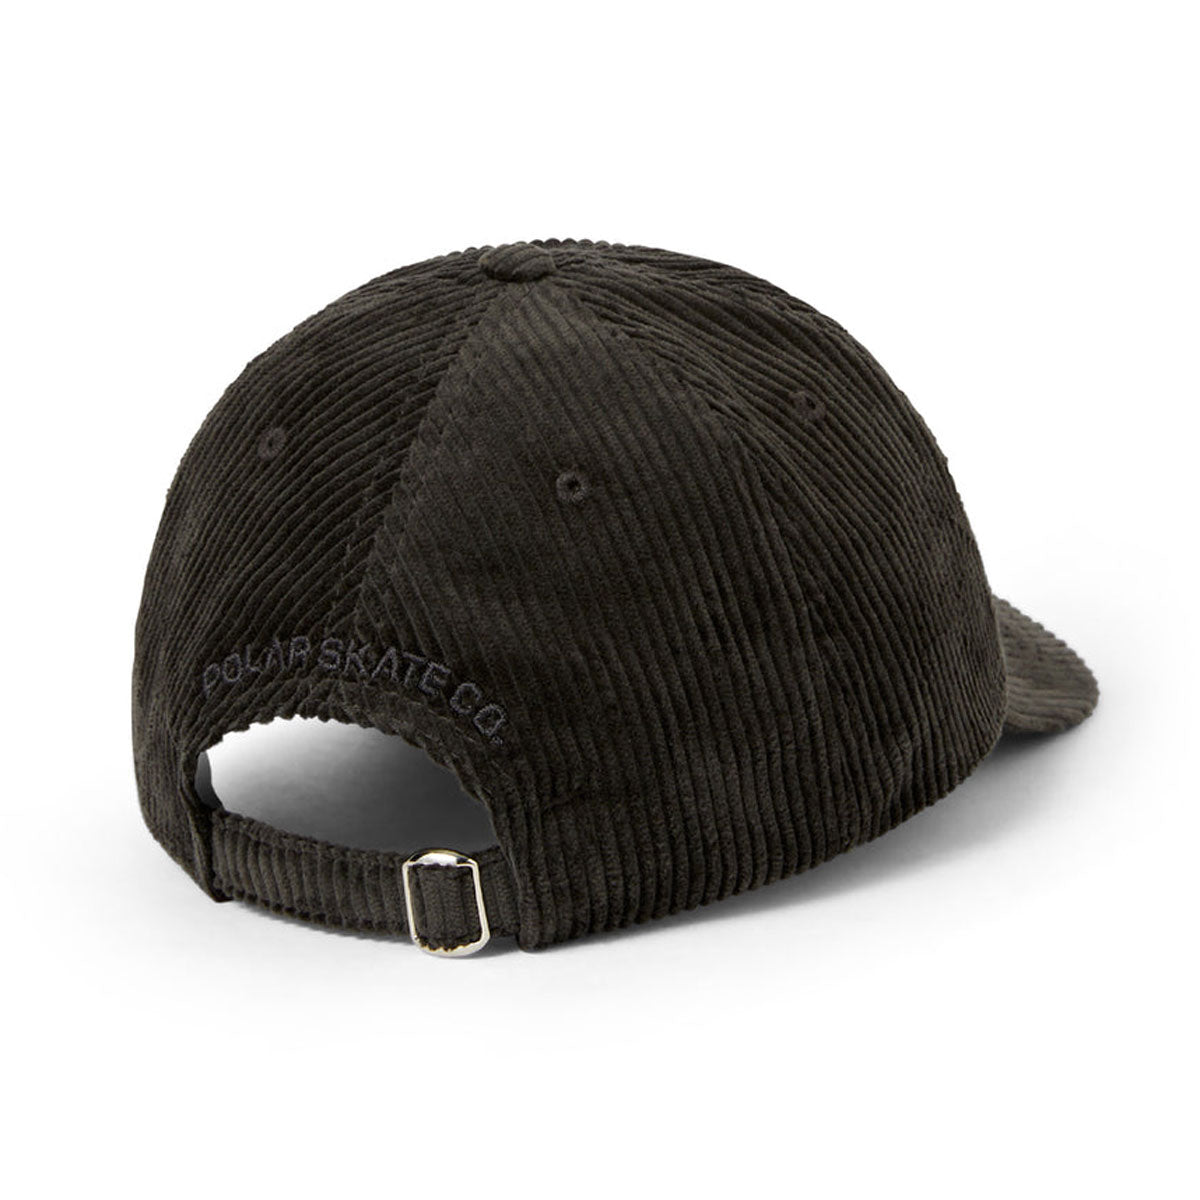 Polar Sam Cord Hat - Dirty Black image 2